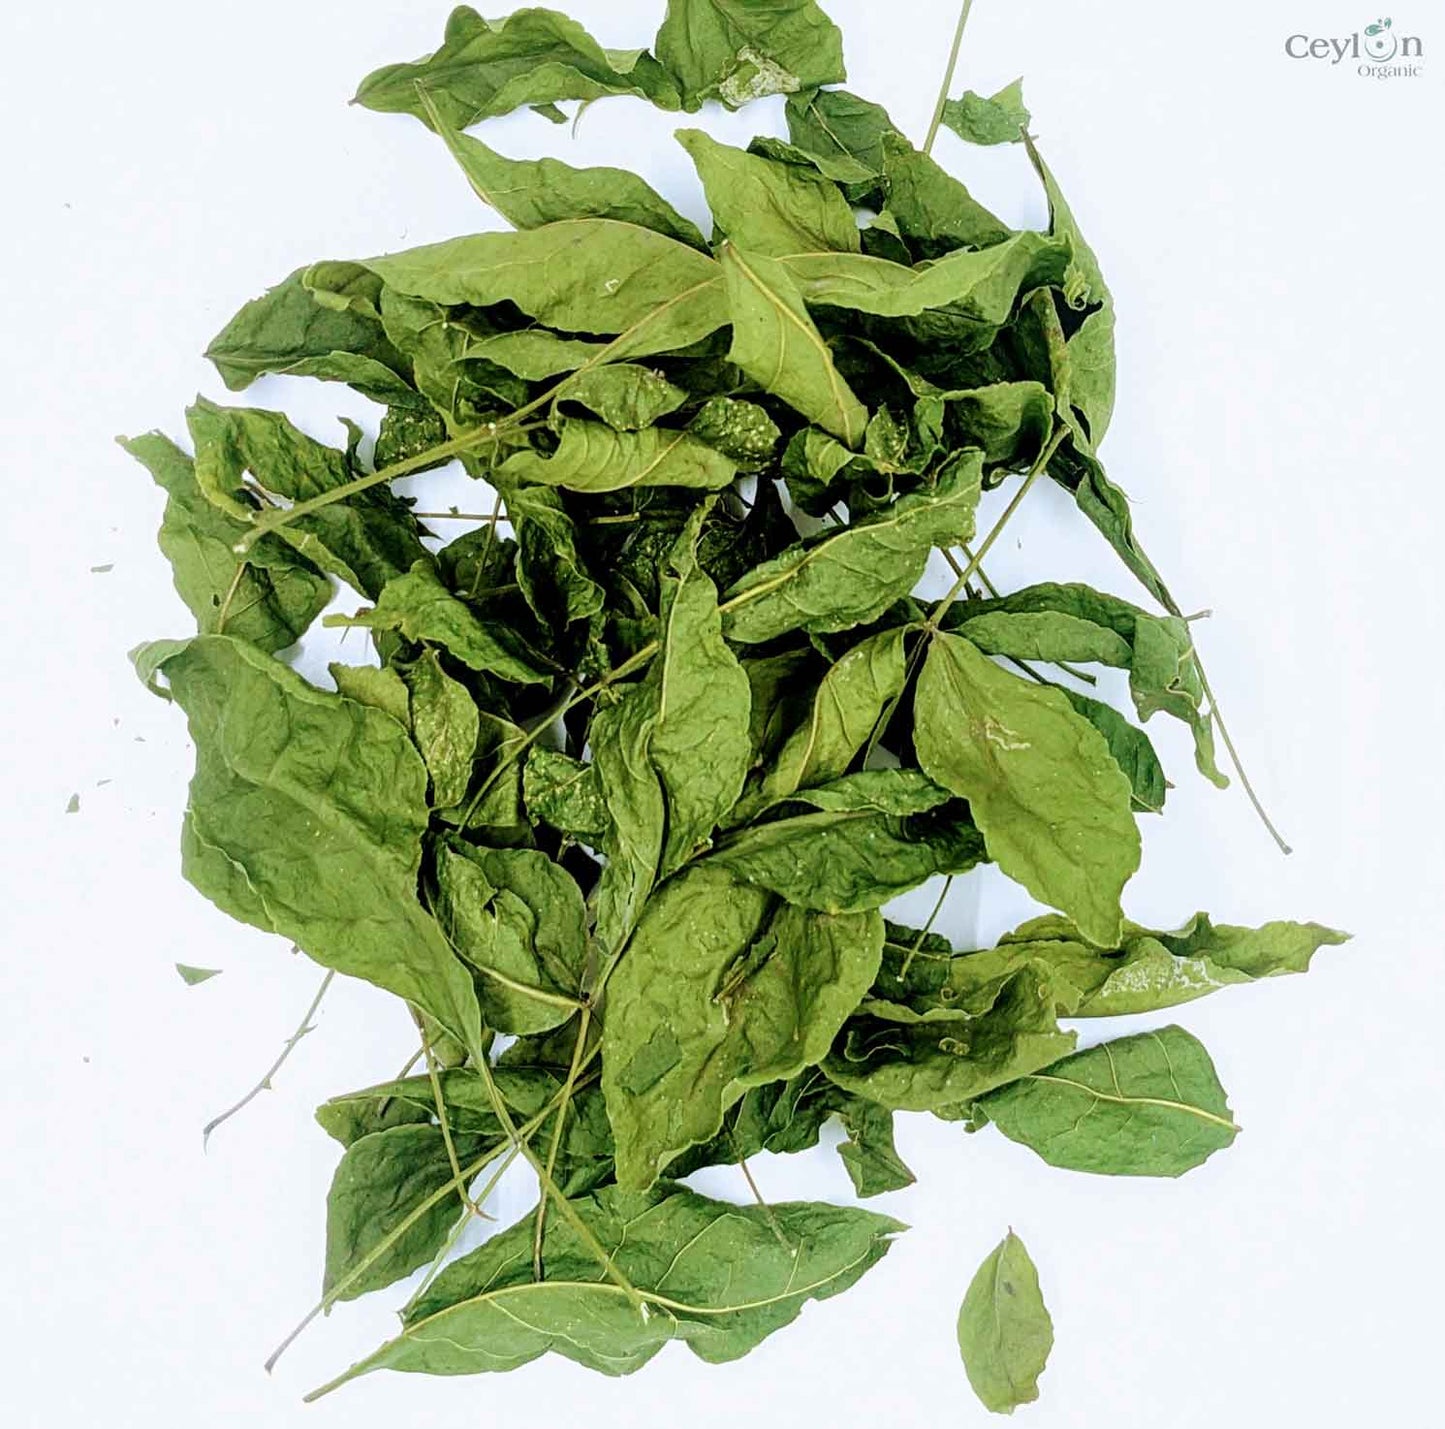 500+ Bael Leaves, Dried Bel Leaves, Dried Bael Leaves, Bilva Leaves |  ceylon organic-2